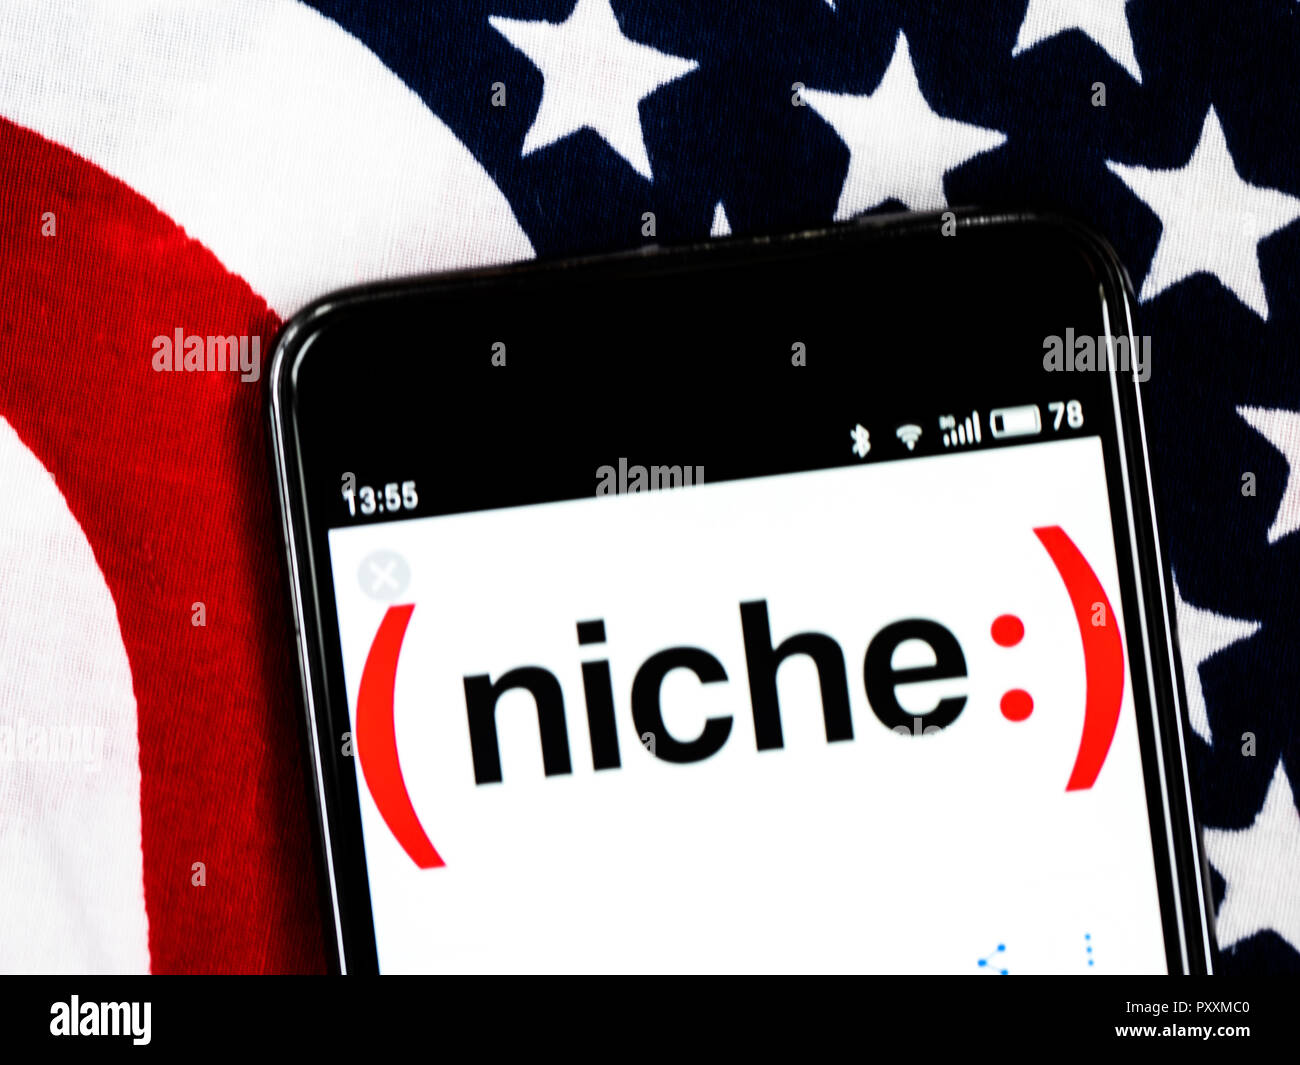 Niche Company logo seen displayed on smart phone. Stock Photo